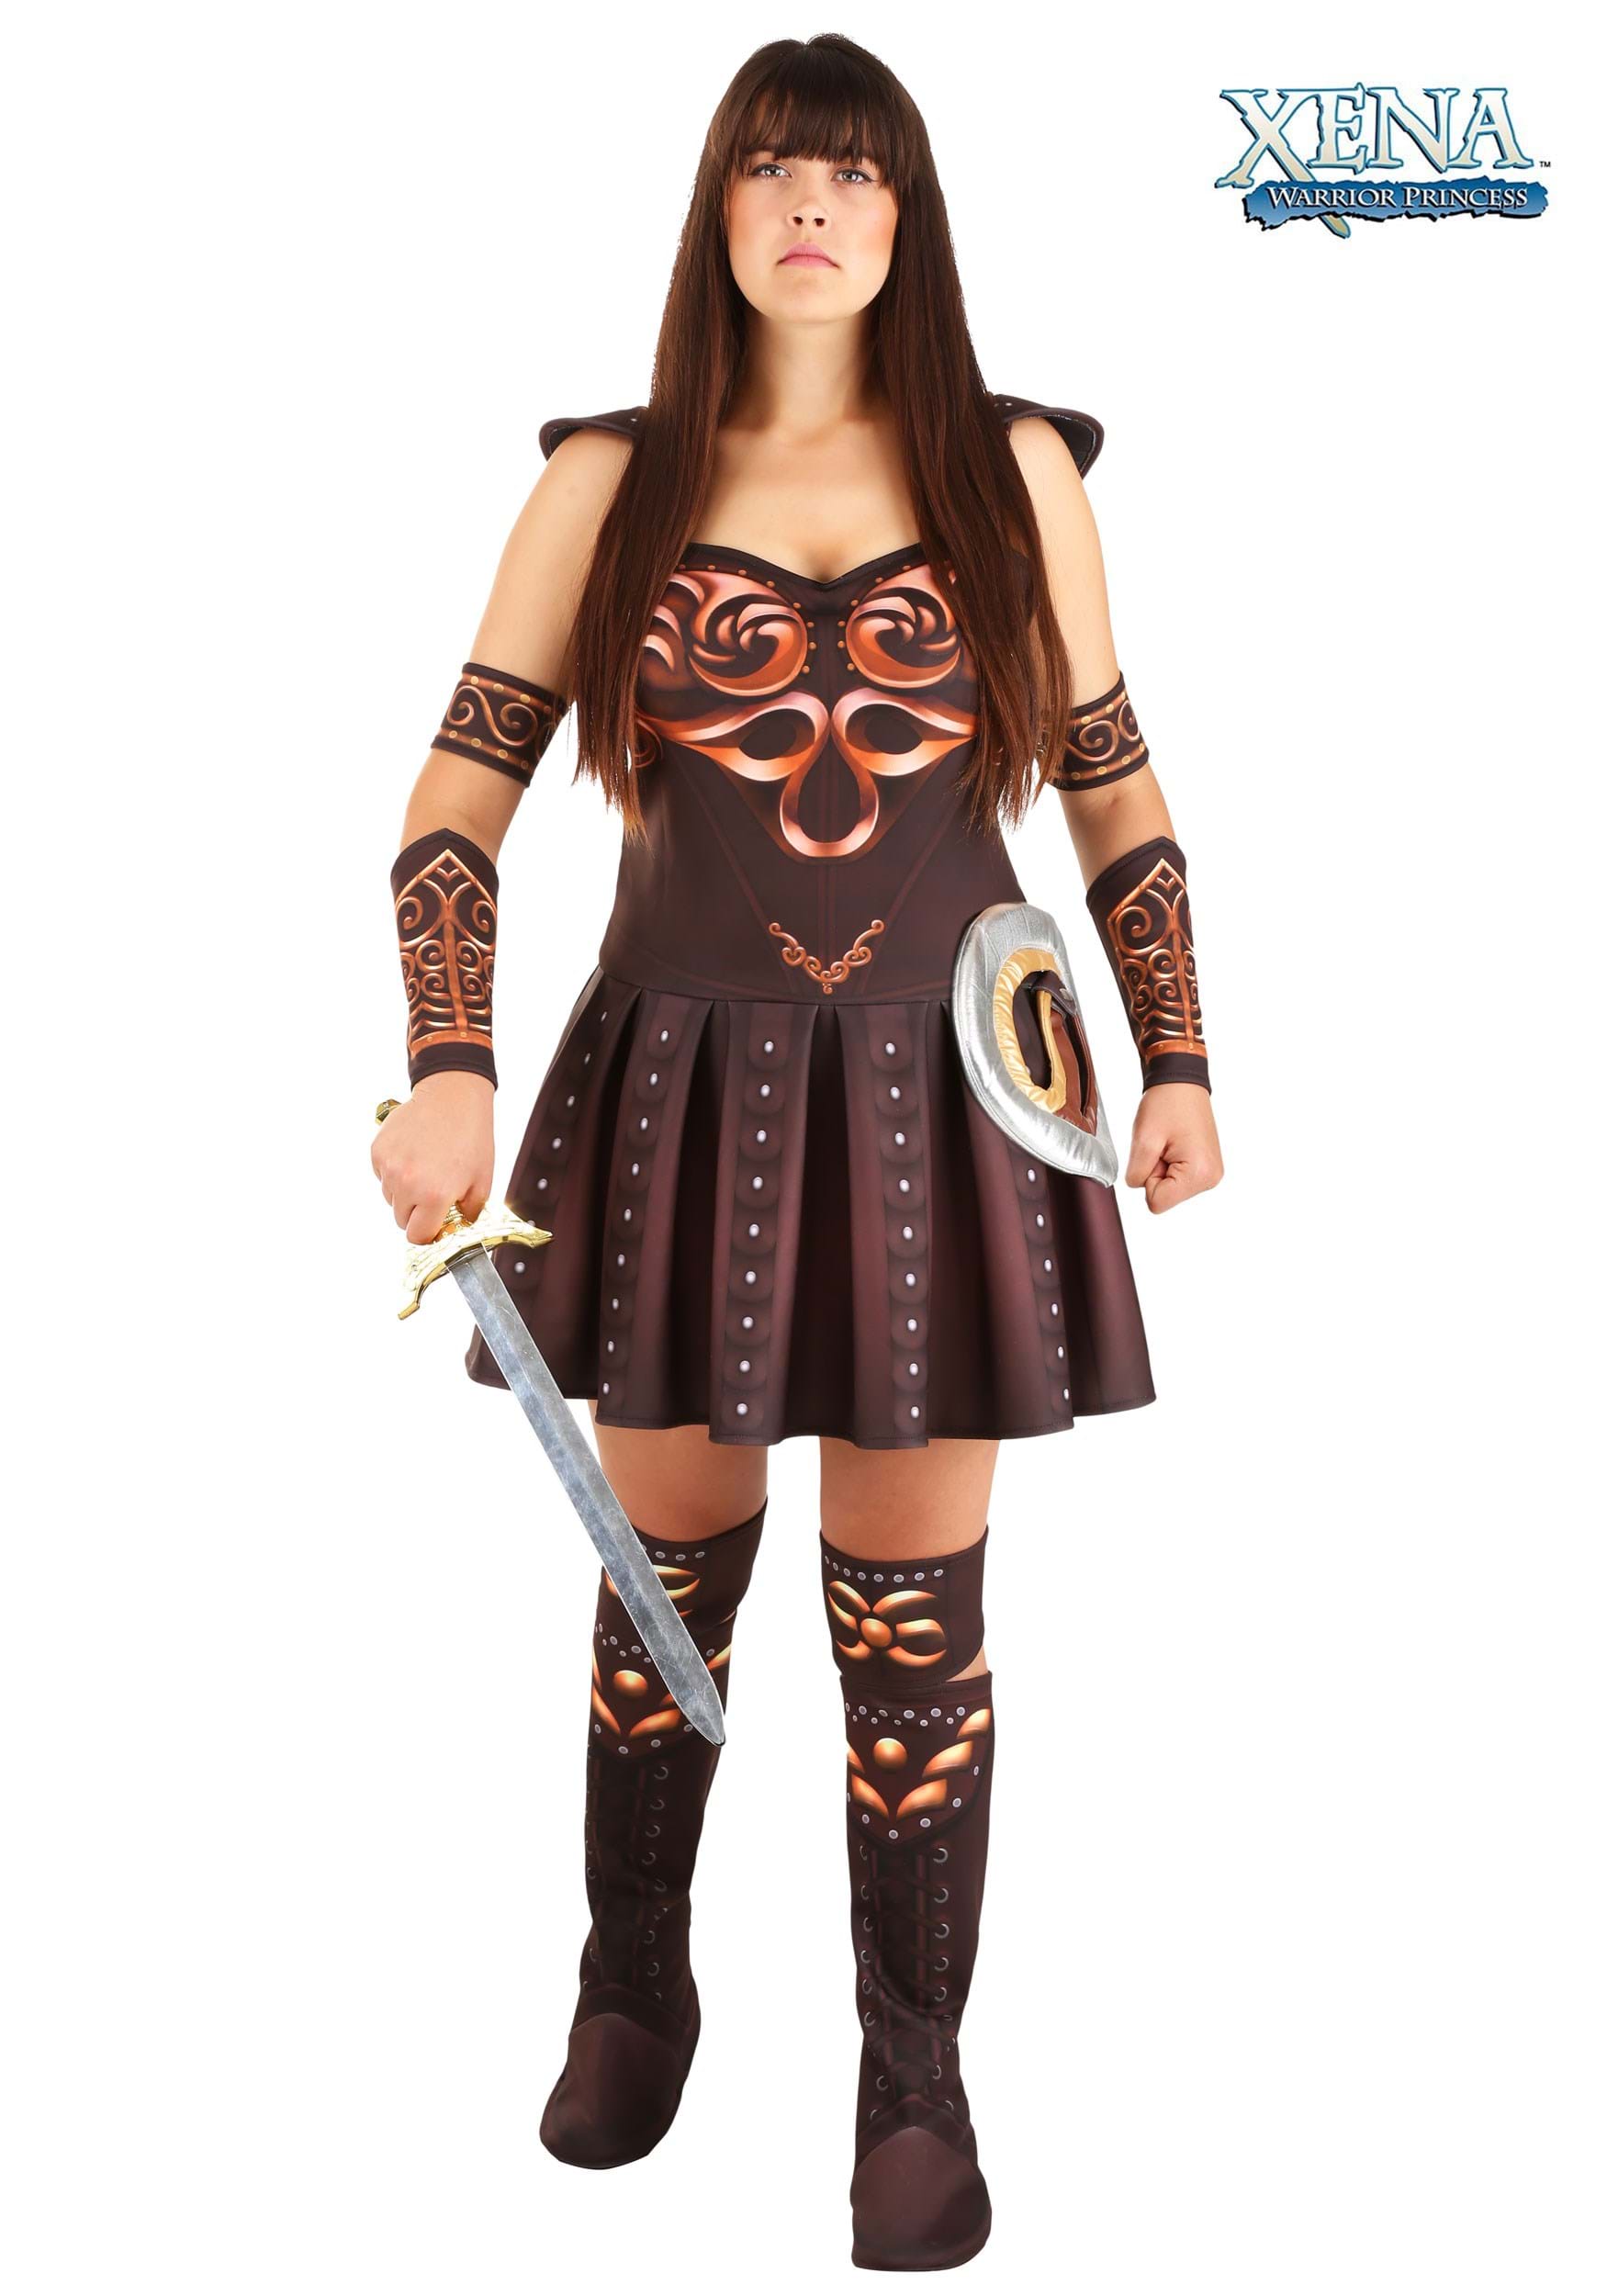 Photos - Fancy Dress XENA FUN Costumes Plus Size  Warrior Princess Women's Costume Brown FUN6471 